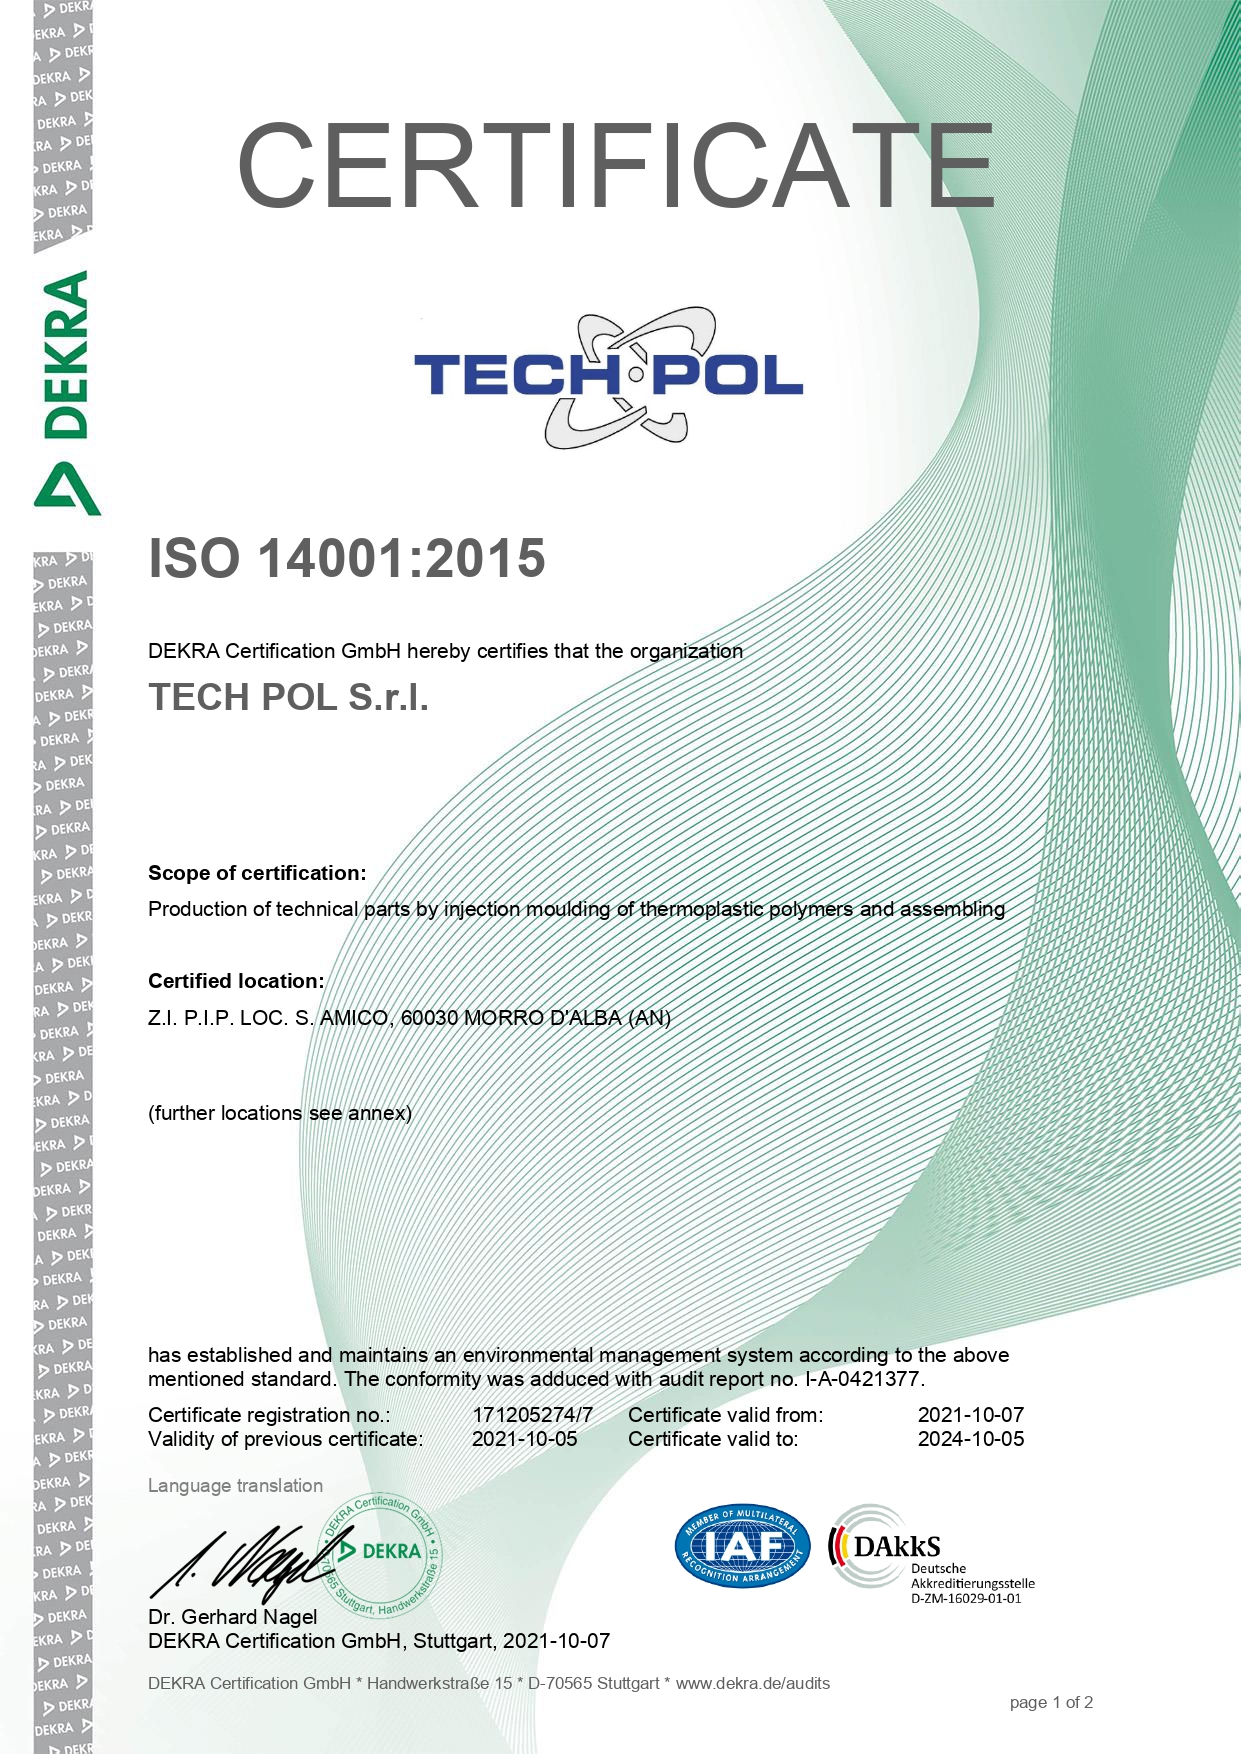 Certificazione UNI EN ISO 14001:2015 DEKRA